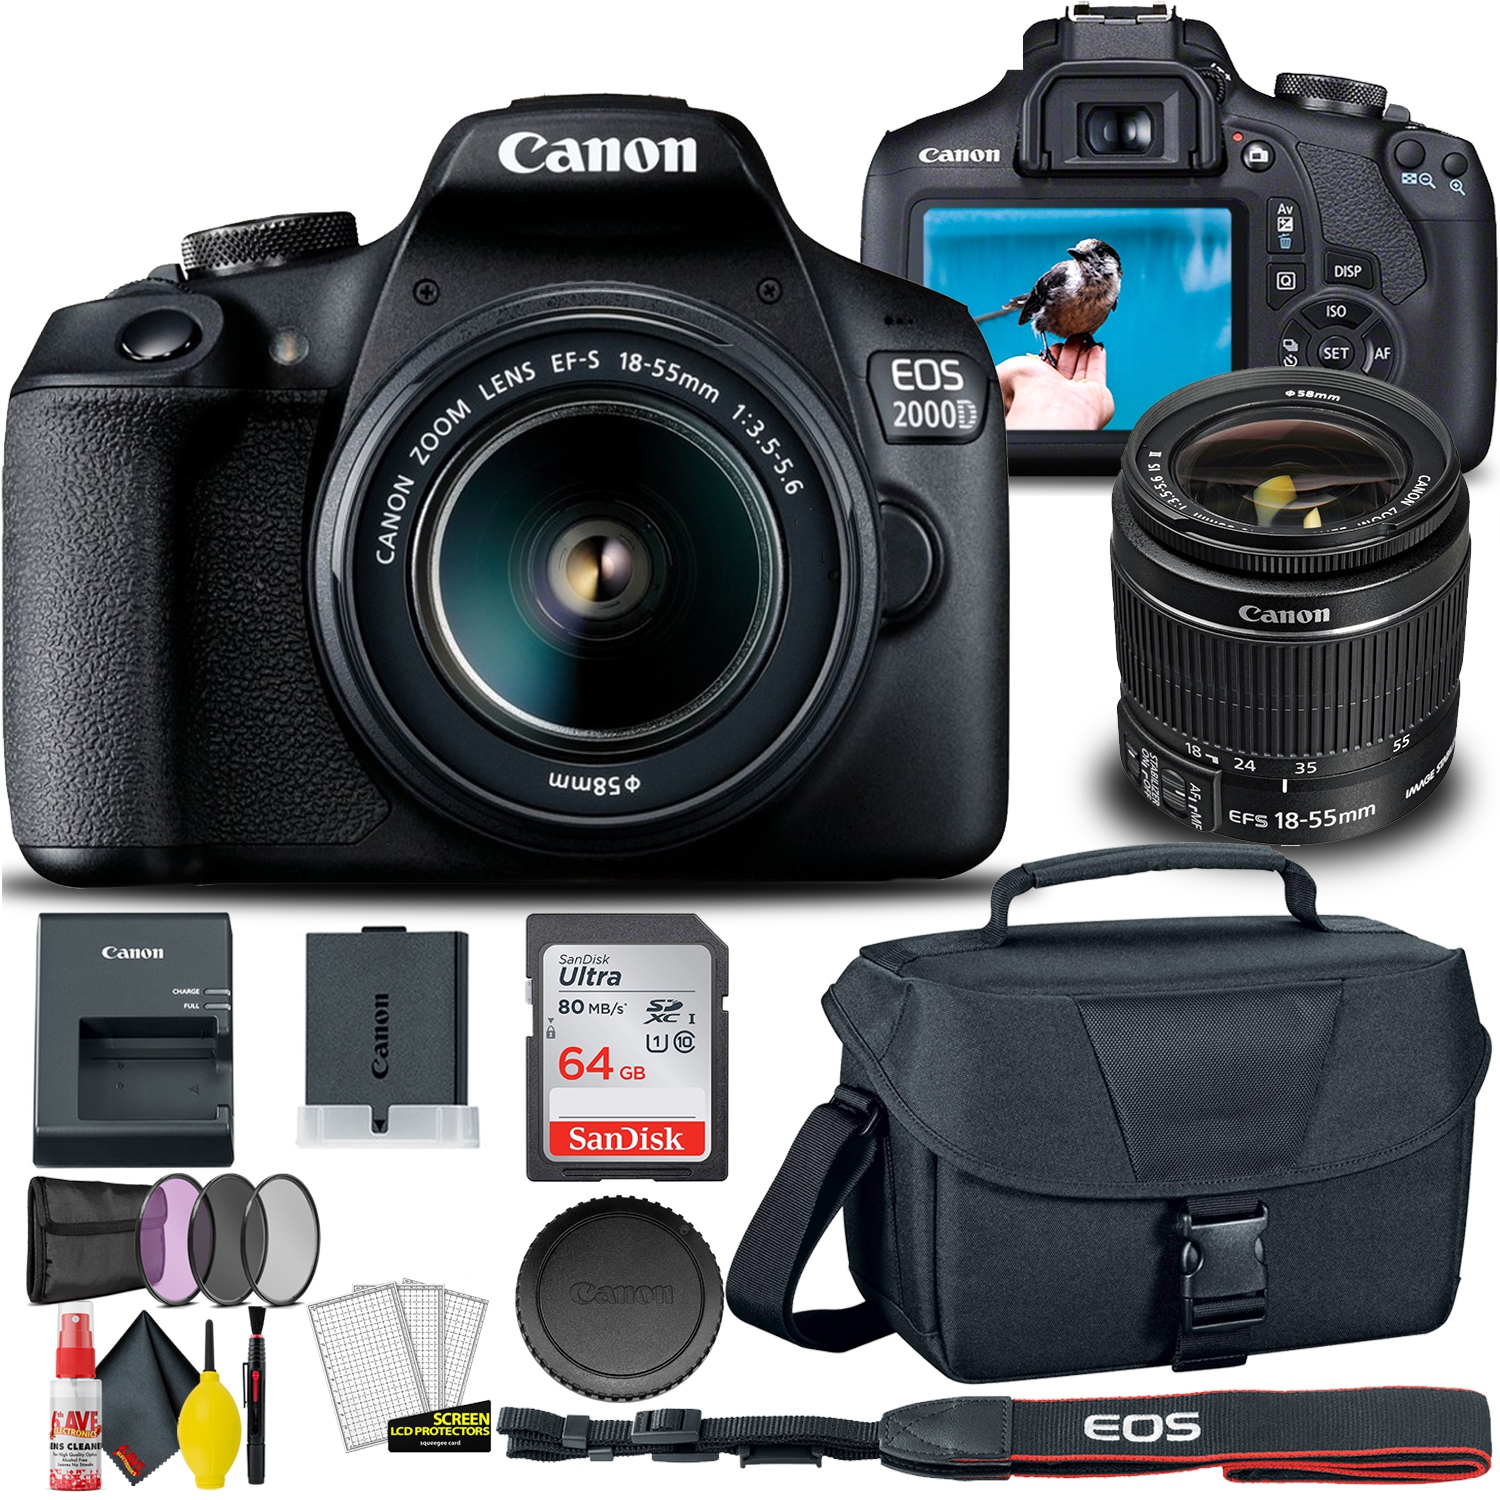 Canon EOS 2000D / Rebel T7 DSLR Camera + 18-55mm Lens, 58mm Filters Bundle